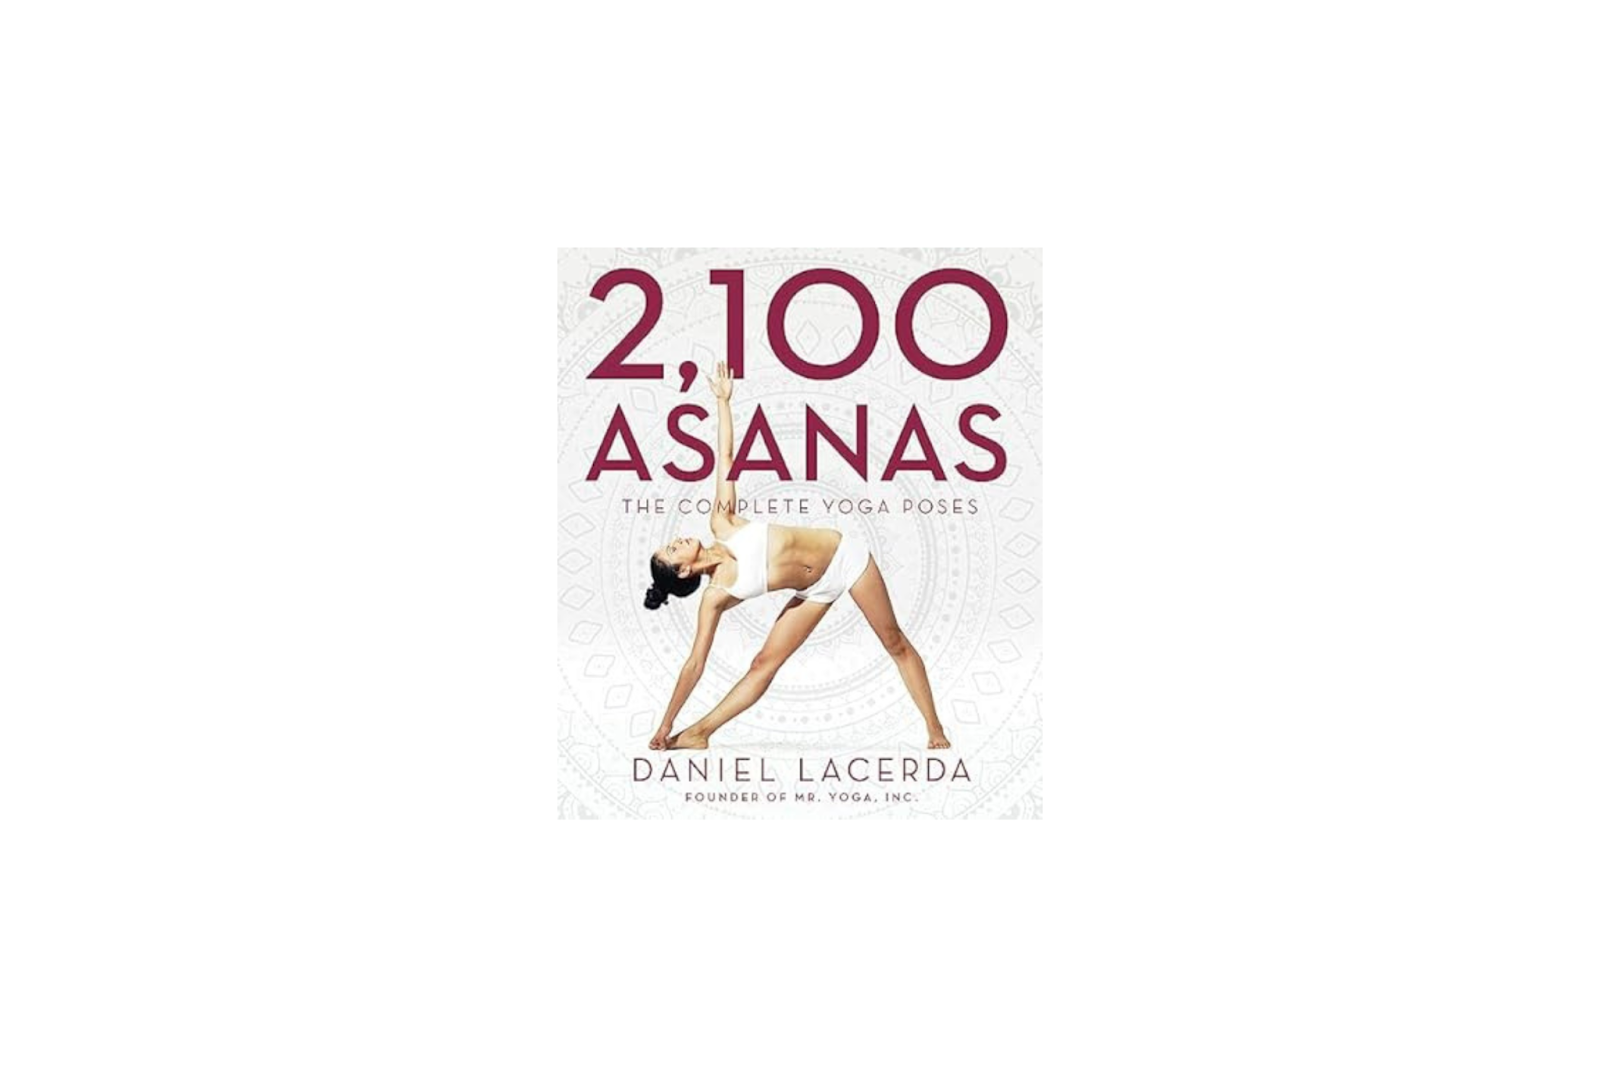 21,000 Asanas by Daniel Larceda